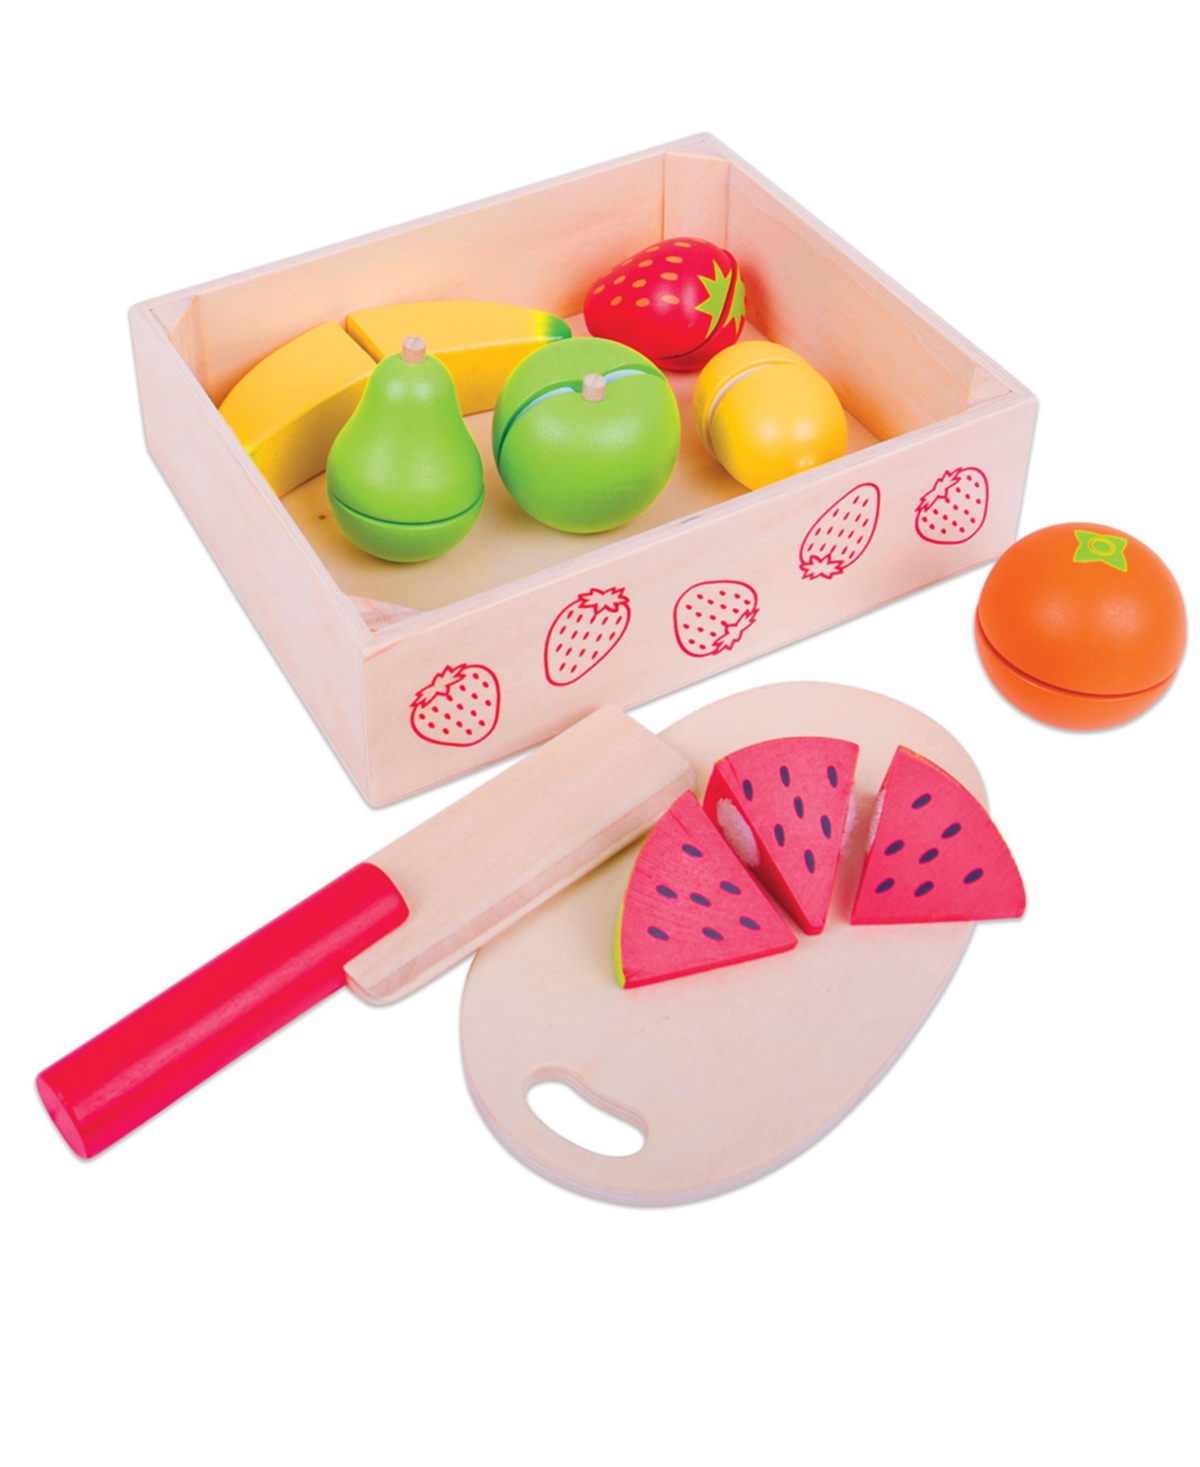 Bigjigs Toys Kids' - Cutting Fruit Crate Set, 10 Piece In Multi